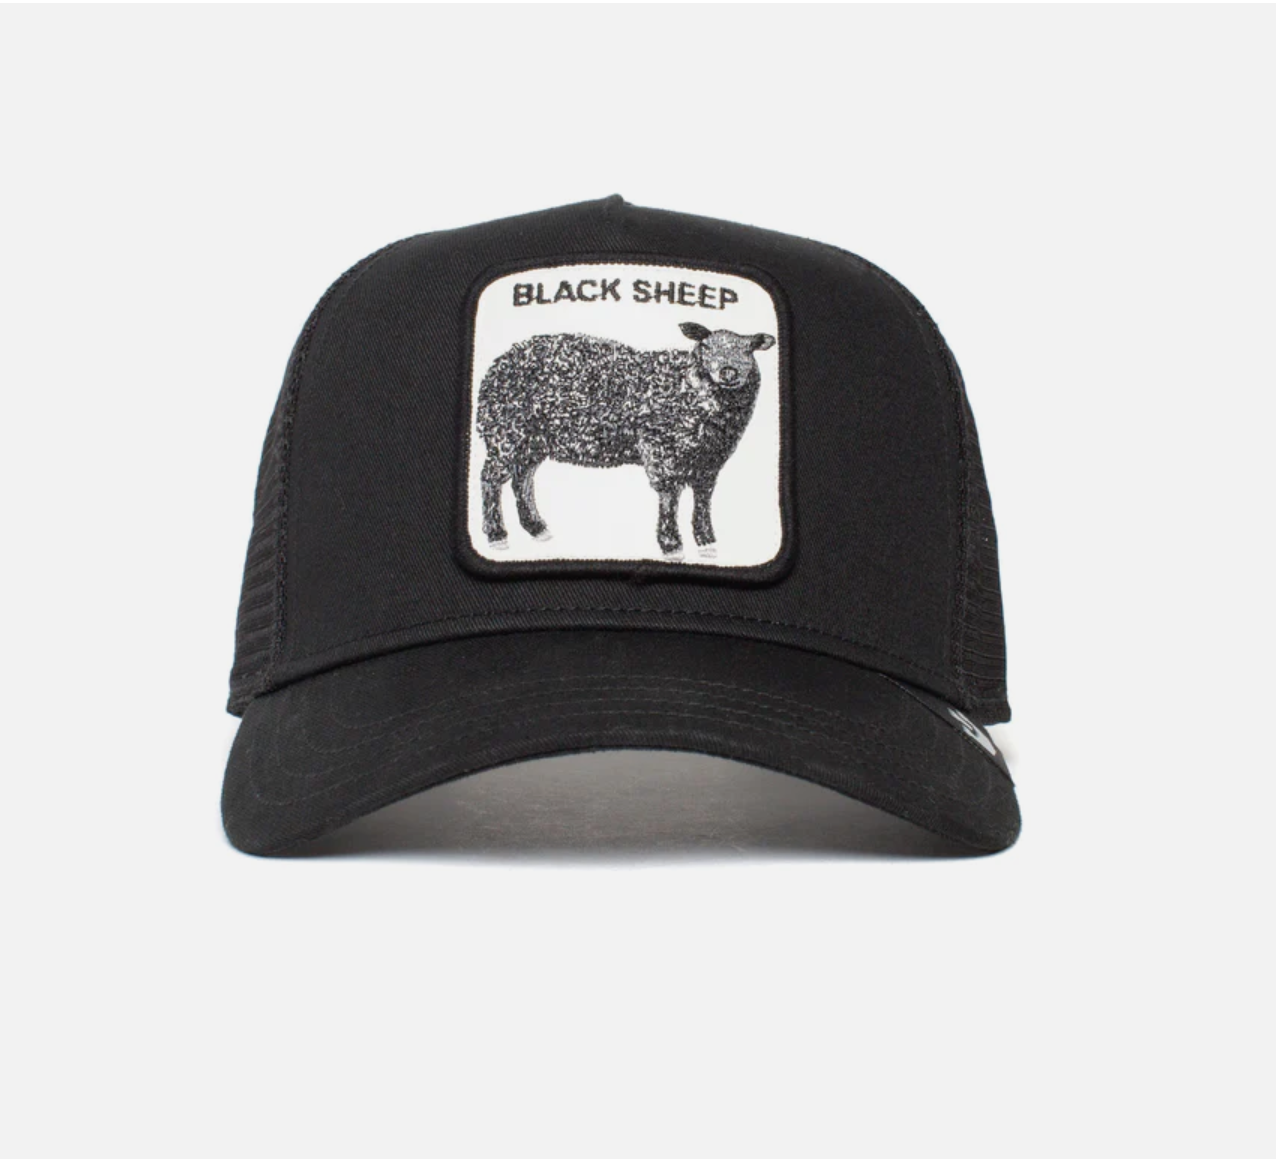 The Black Sheep Trucker Hat - Goorin Bros